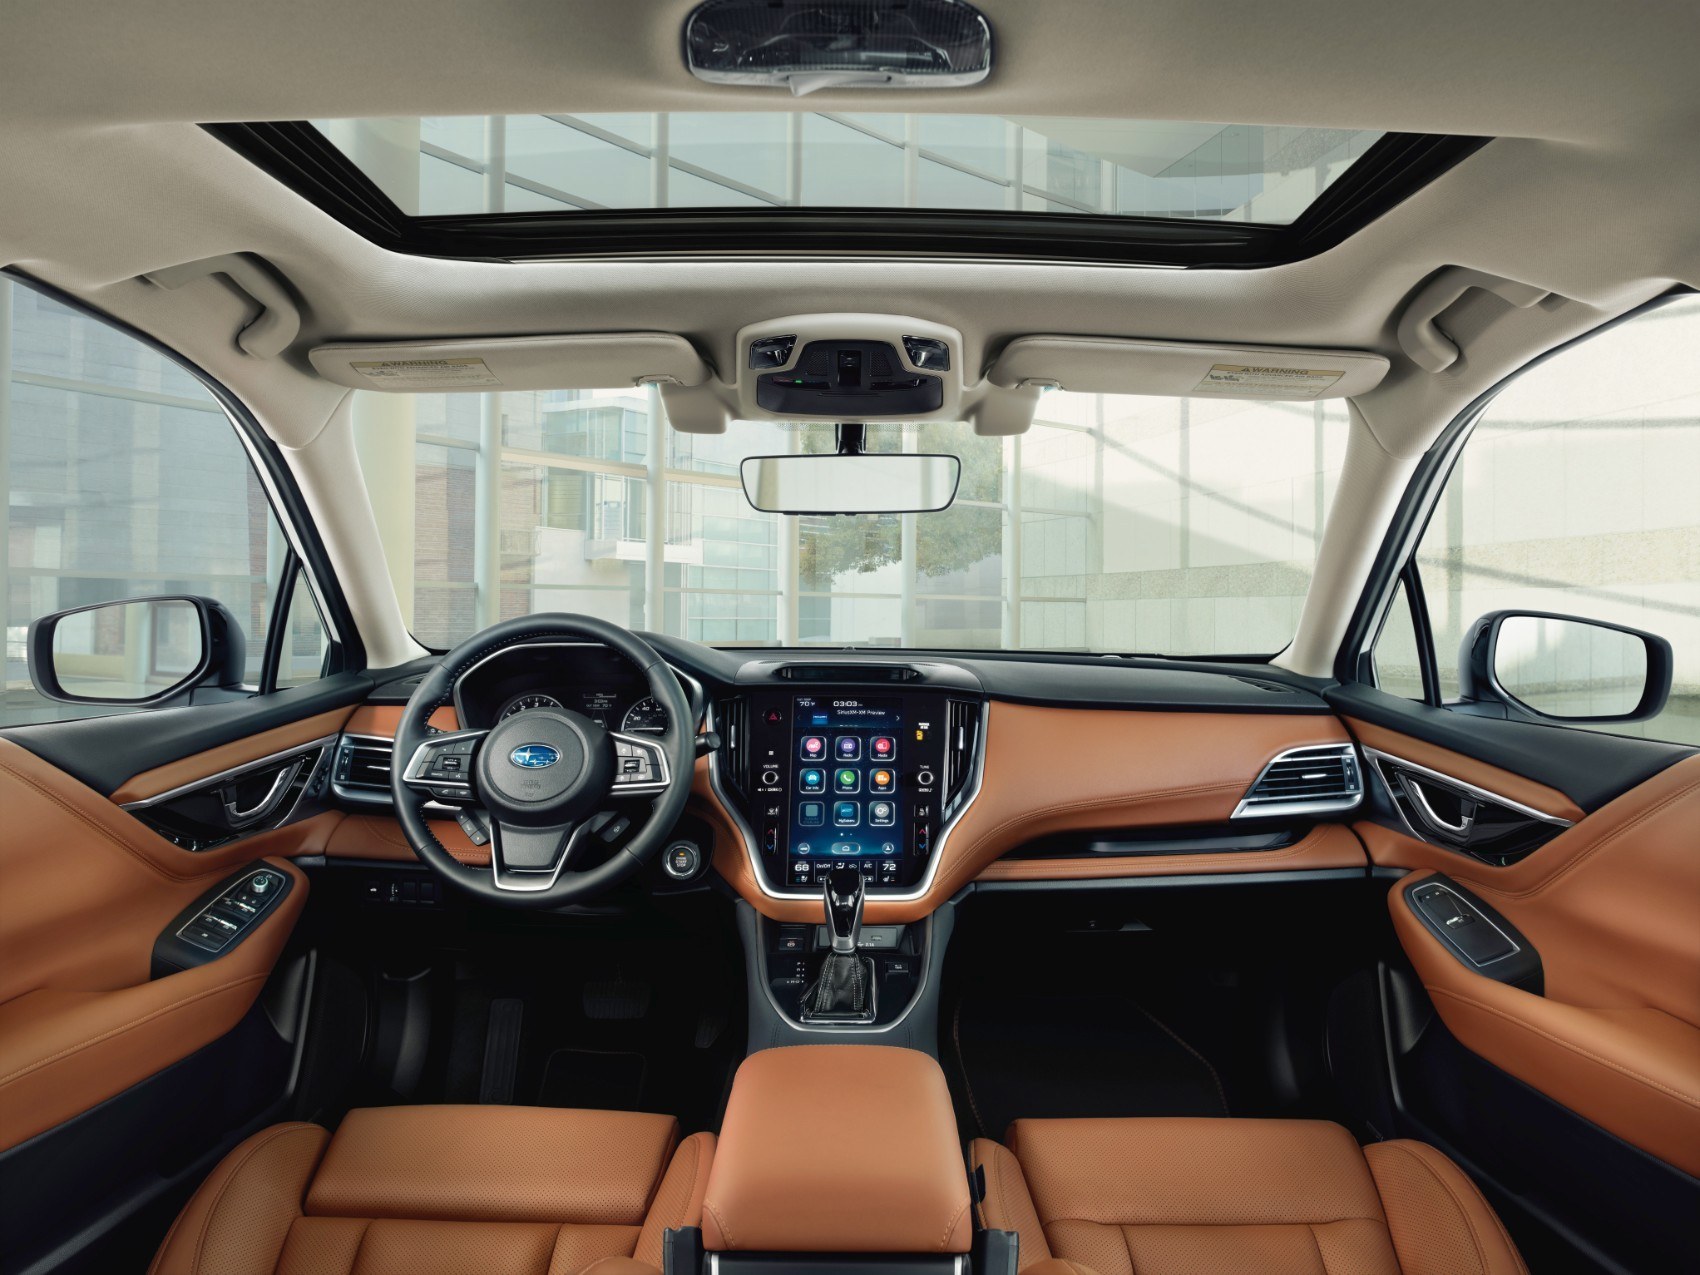 2021 Subaru Legacy interior layout.